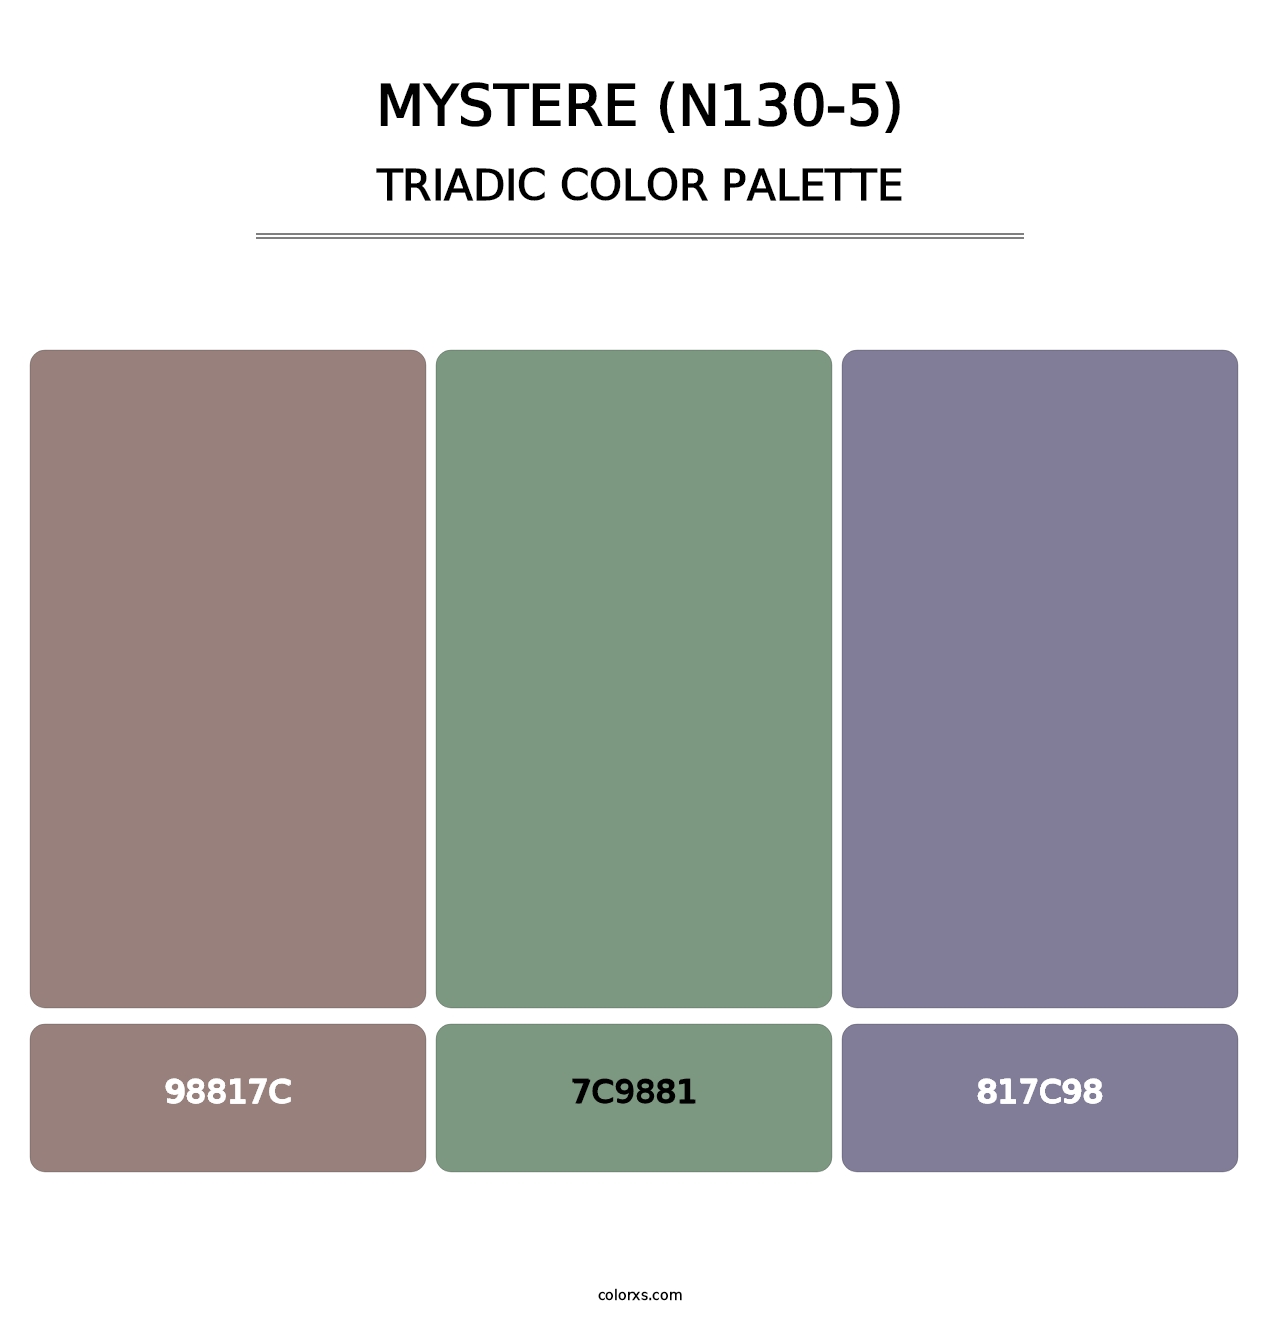 Mystere (N130-5) - Triadic Color Palette